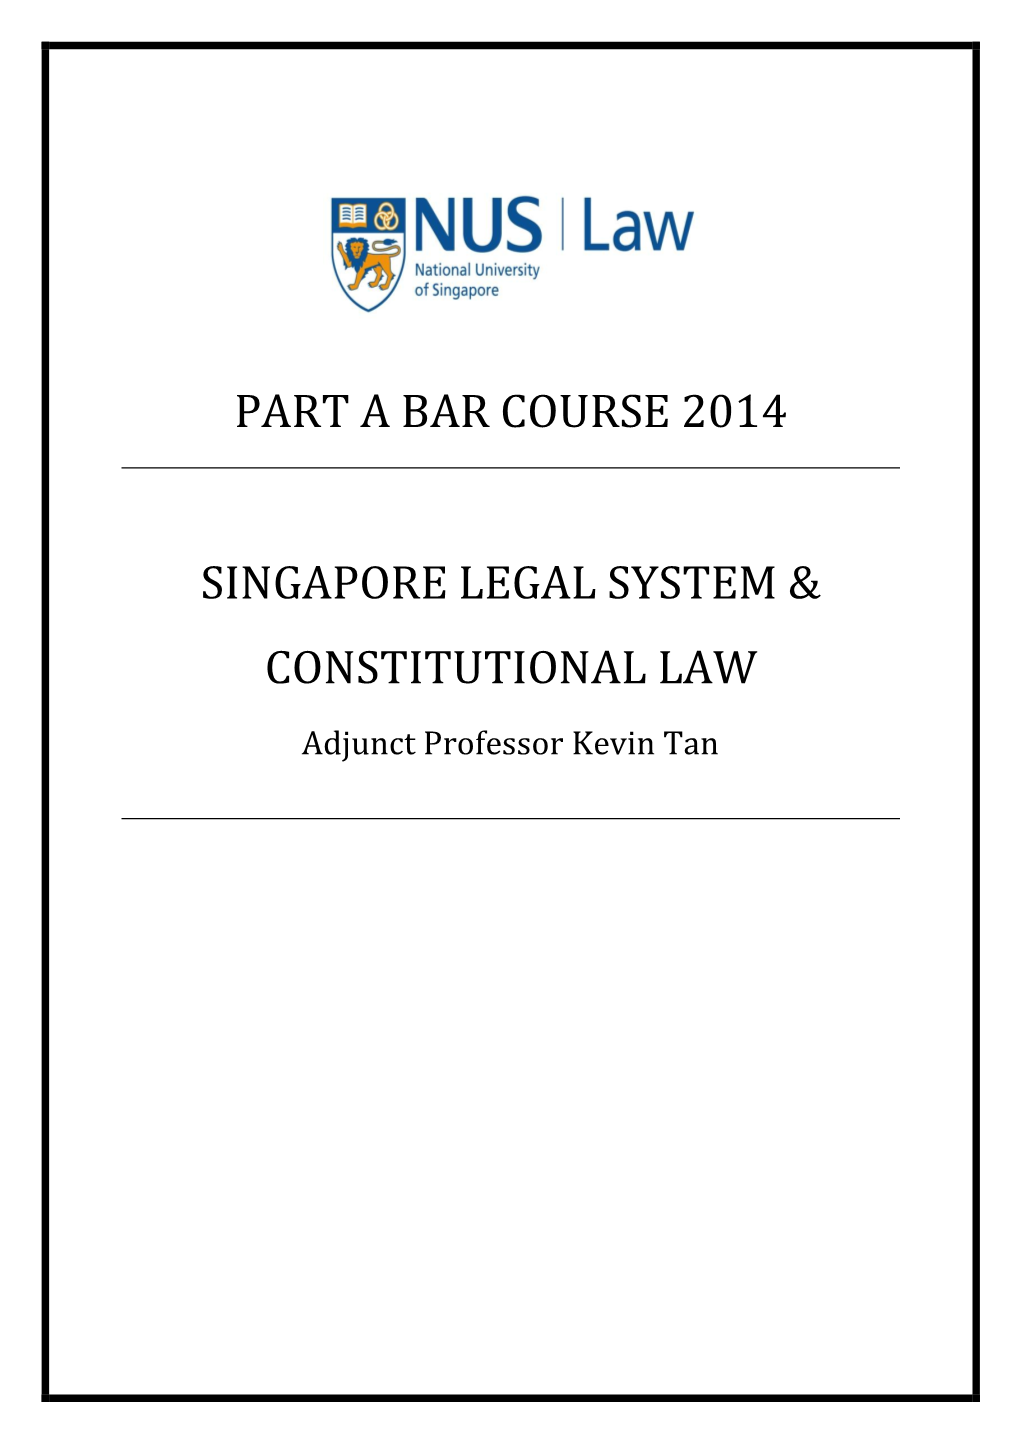 Part a Bar Course 2014 Singapore Legal System & Constitutional